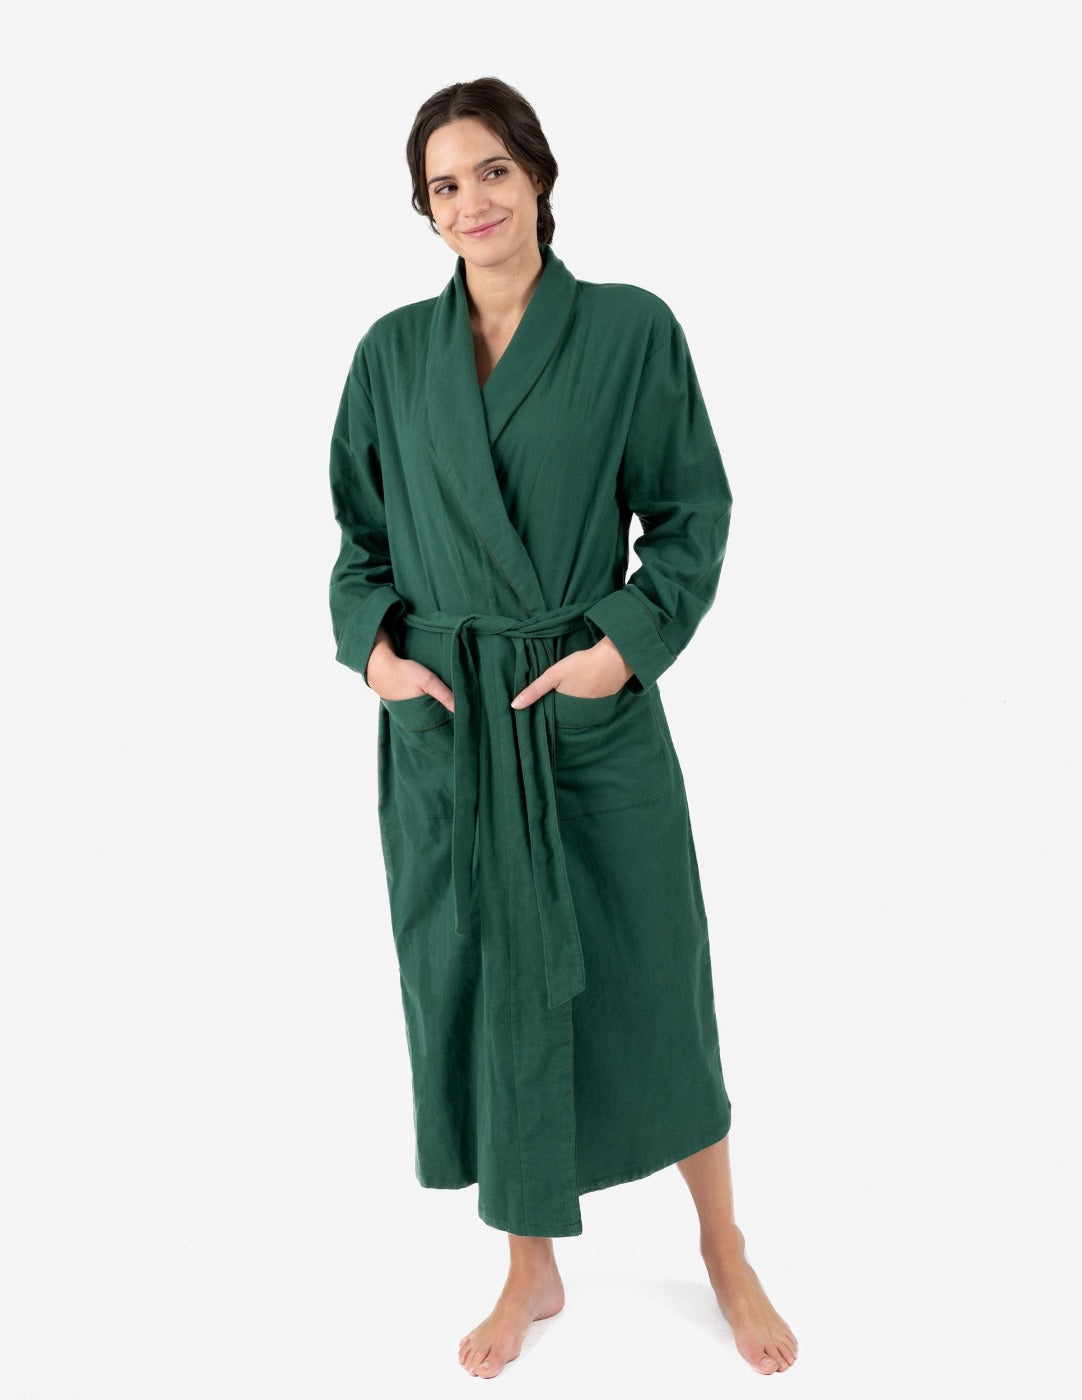 women's green flannel robe for christmas